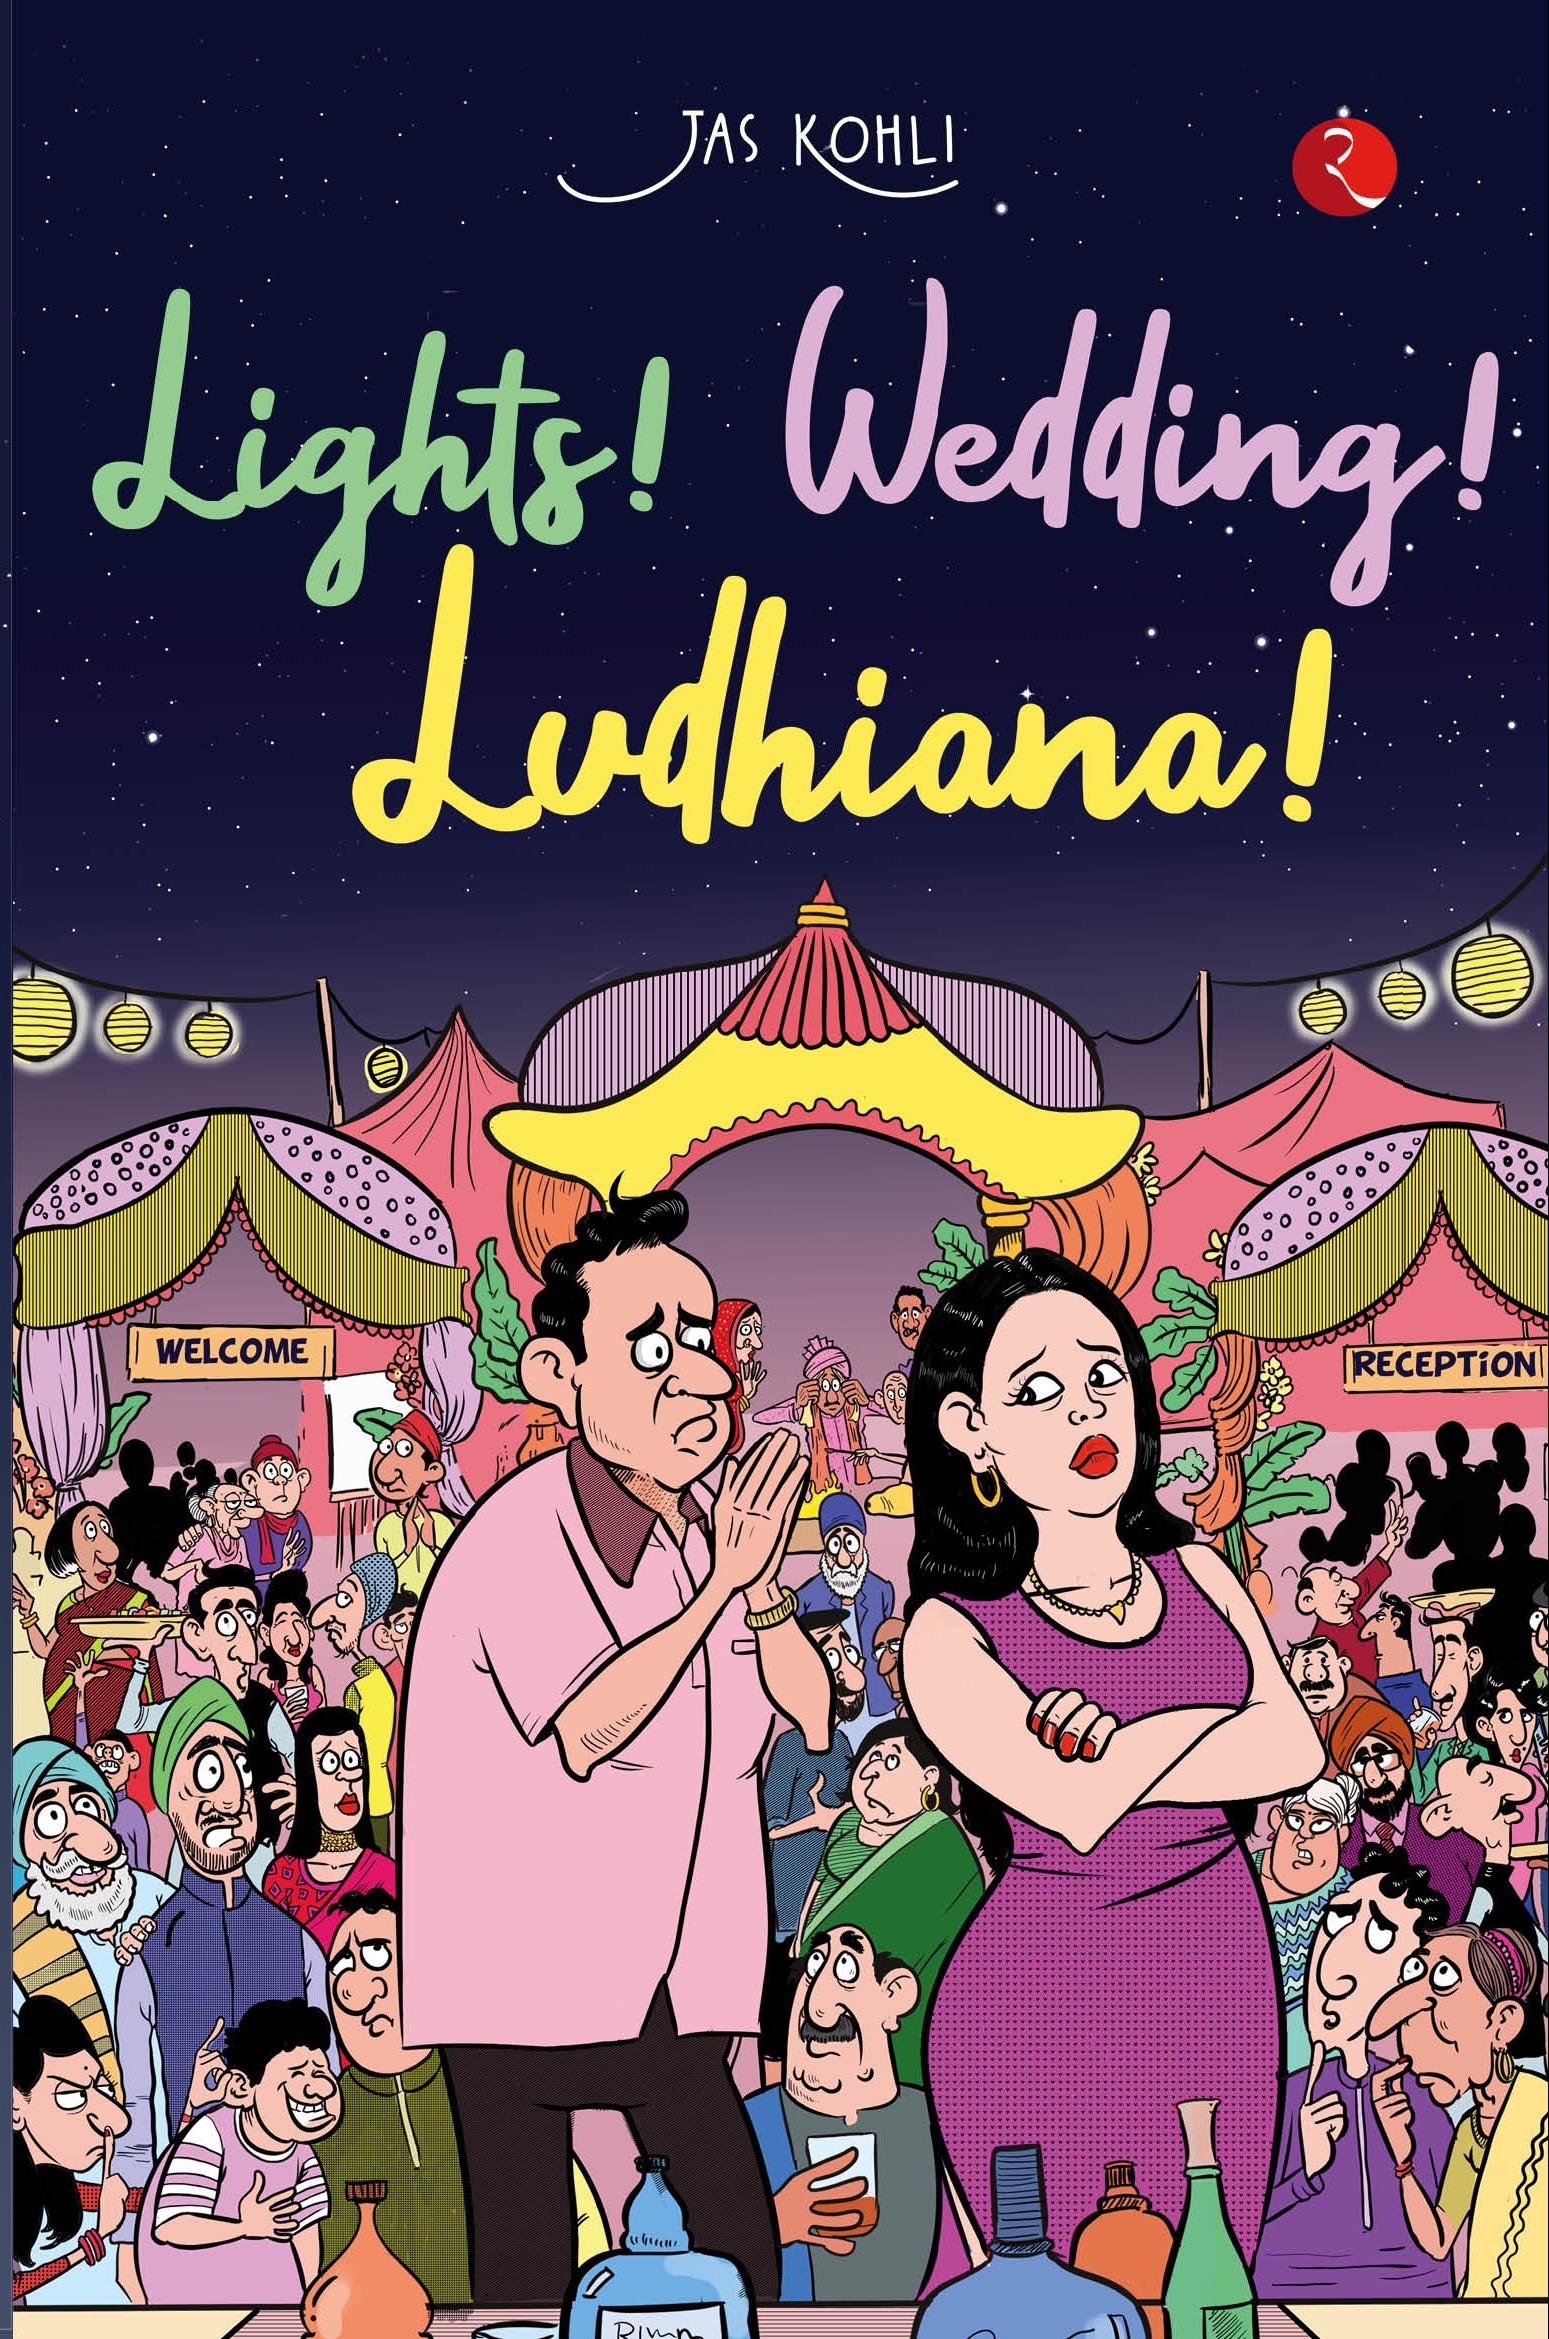 Author Jas Kohli tickles your funny bone with his recent work, “Lights! Wedding! Ludhiana!”